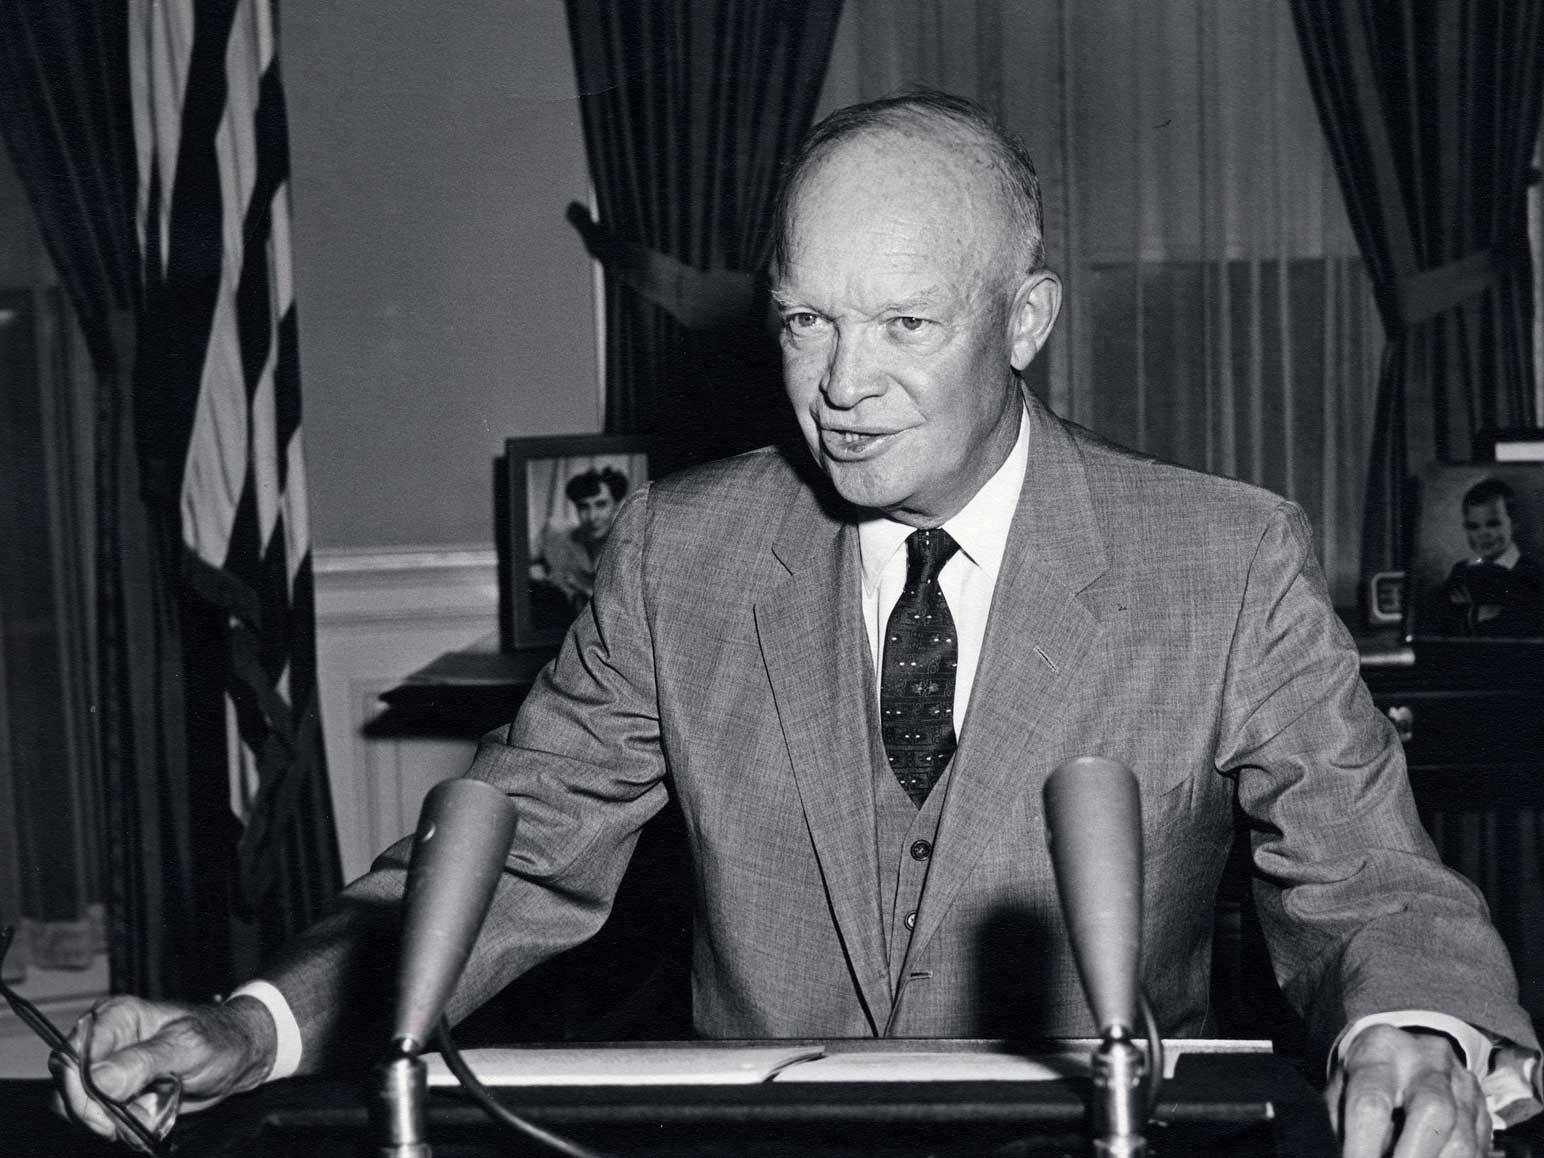 President Eisenhower sits at desk